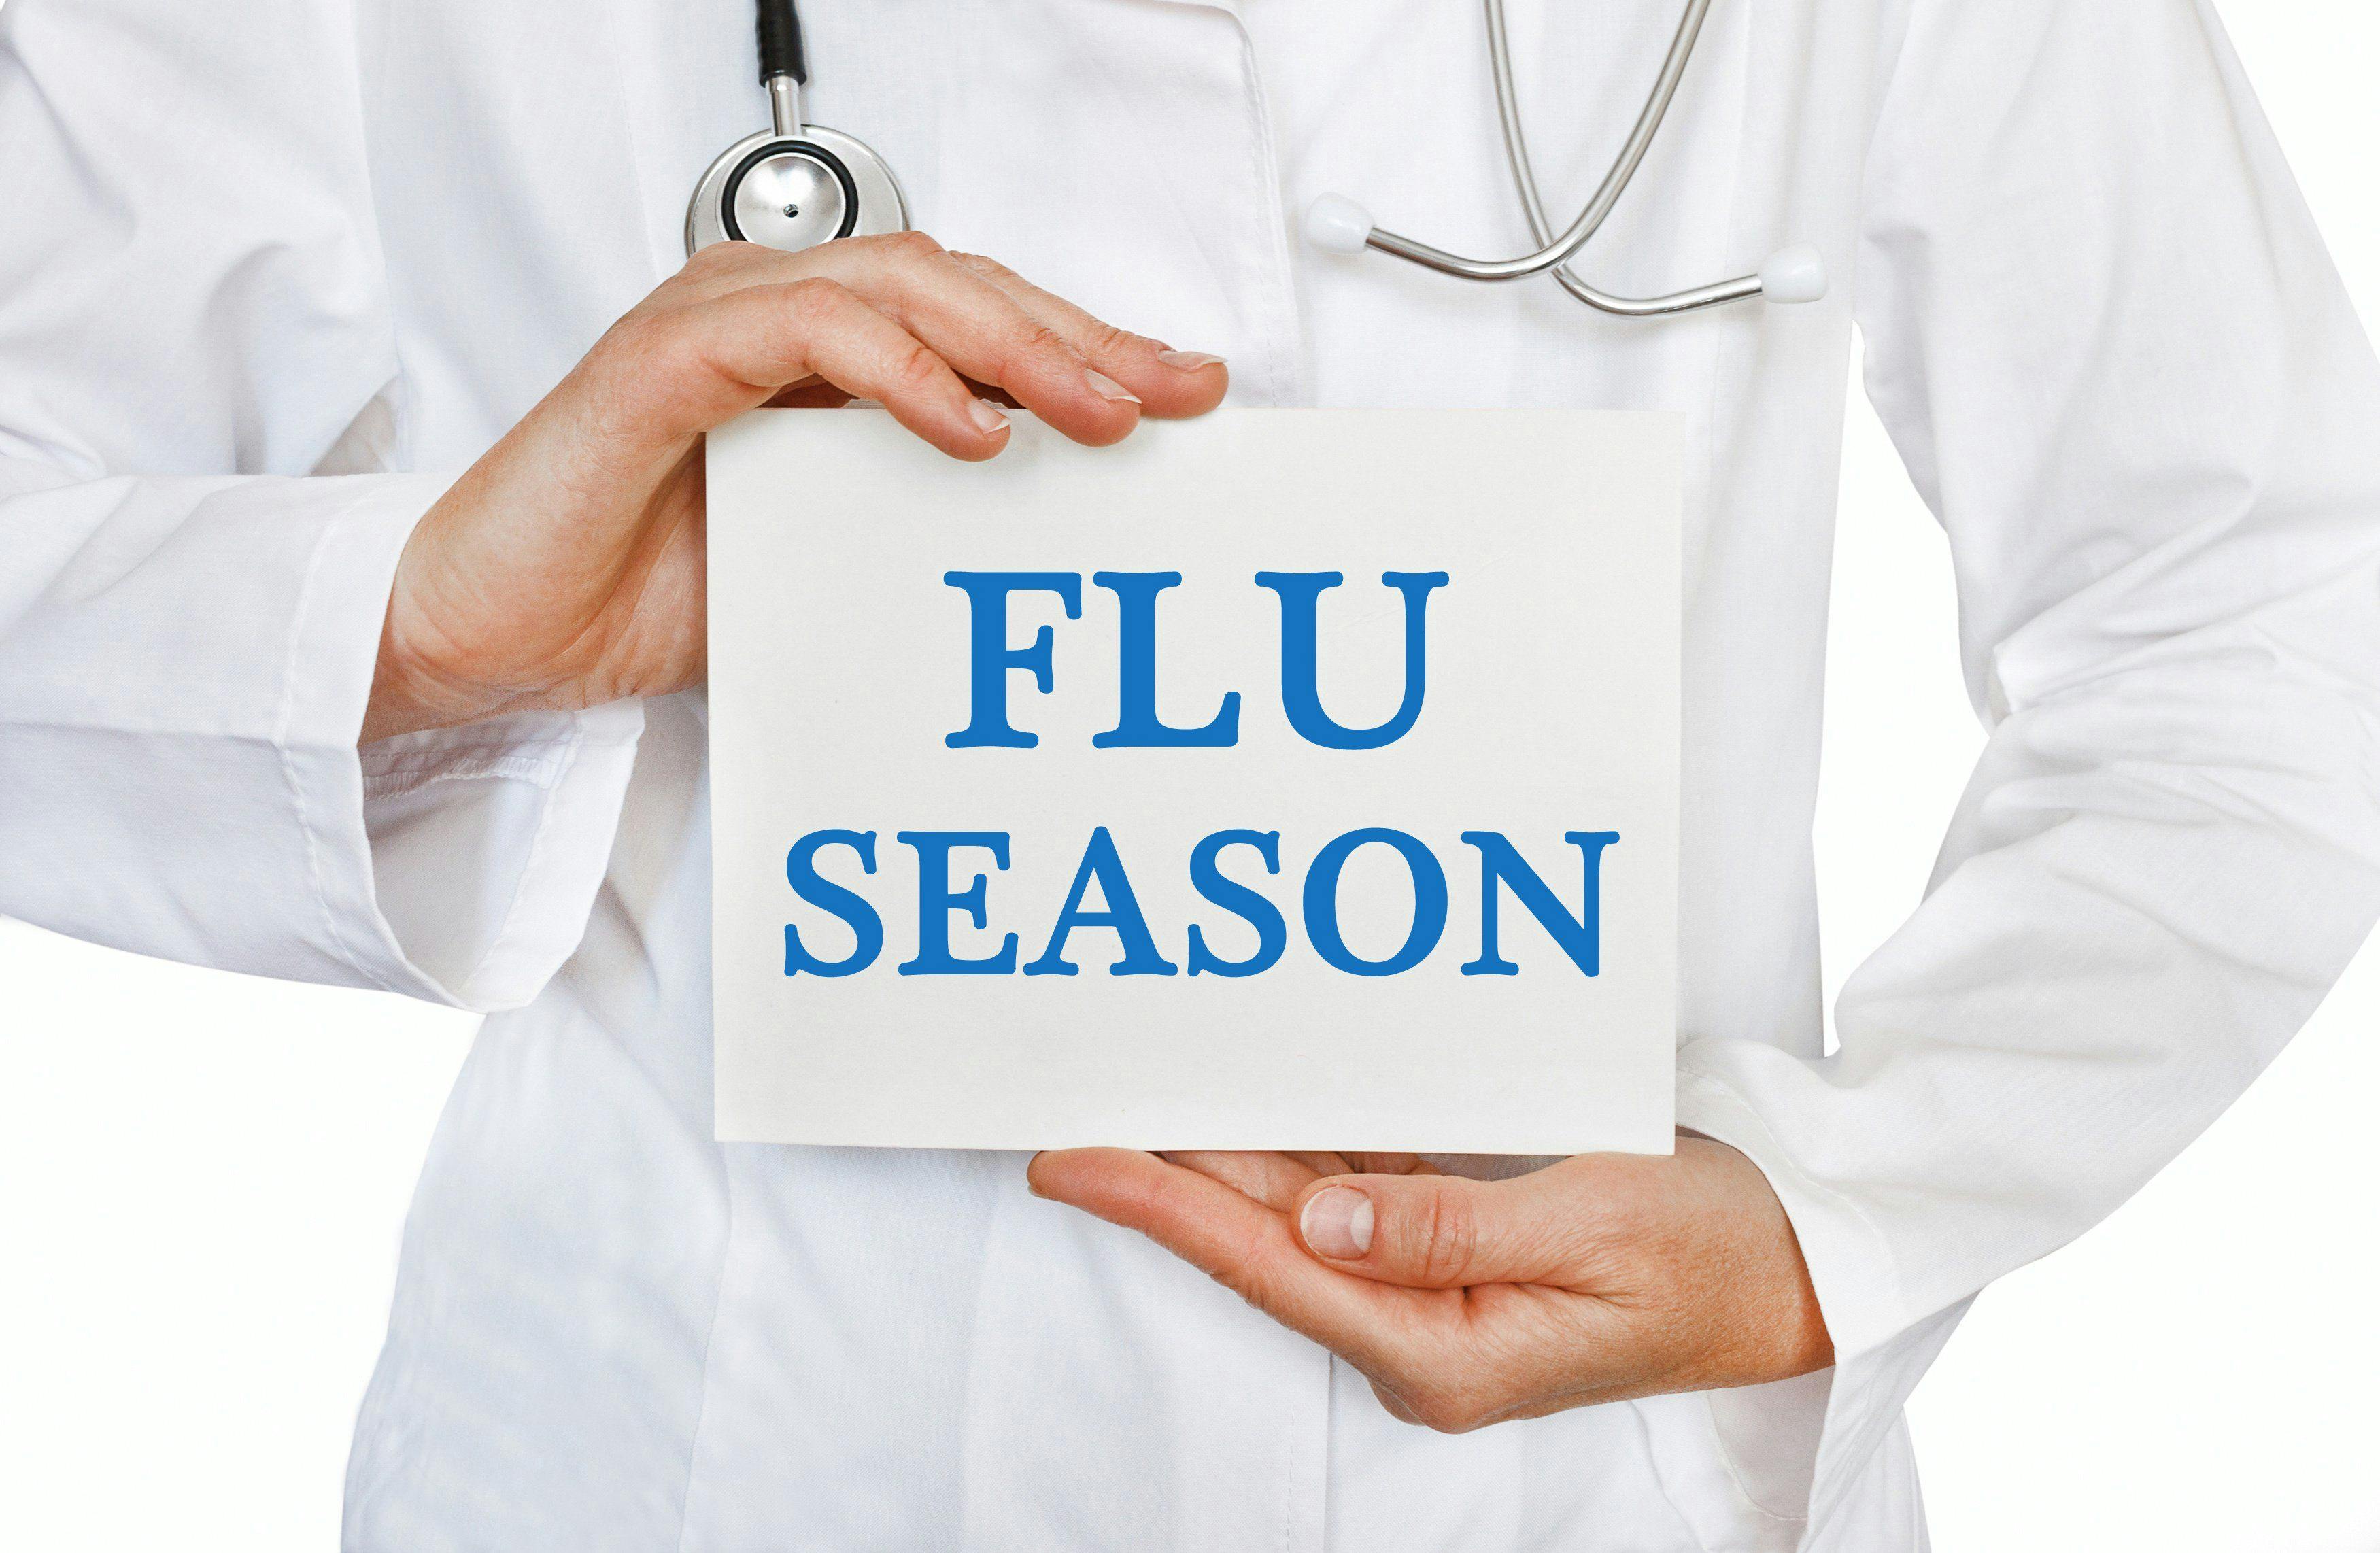 Flu season 2019: How bad will it be?